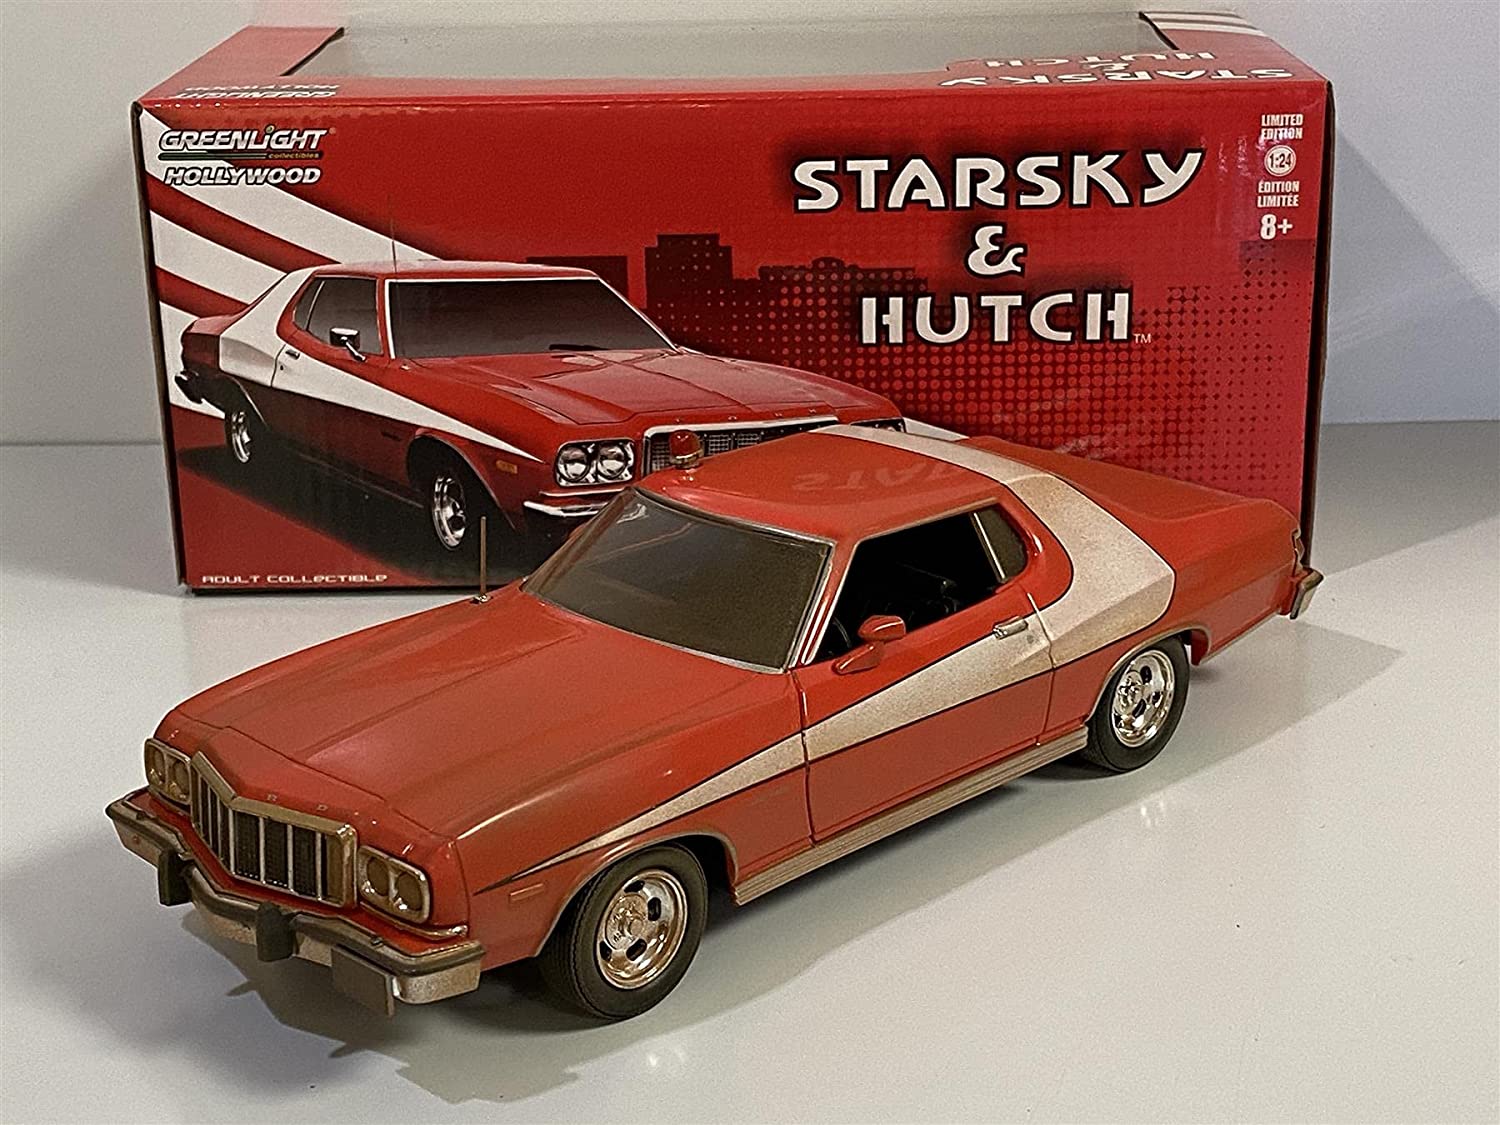 STARSKY & HUTCH - 1976 Gran Torino 1:24 